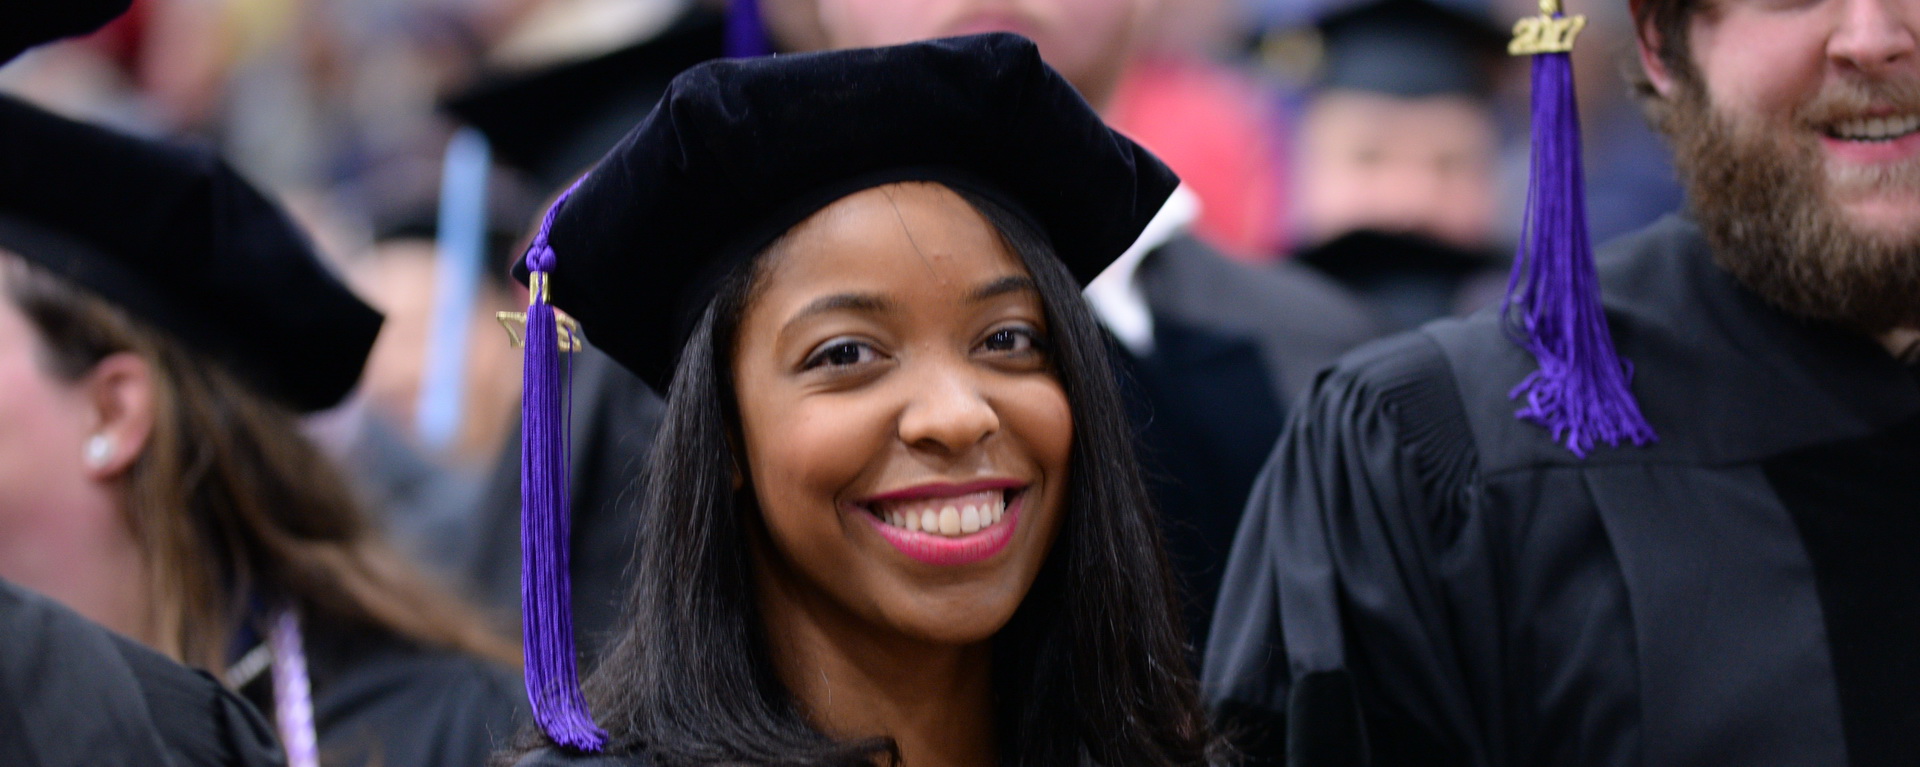 girl in graduation cap smiling